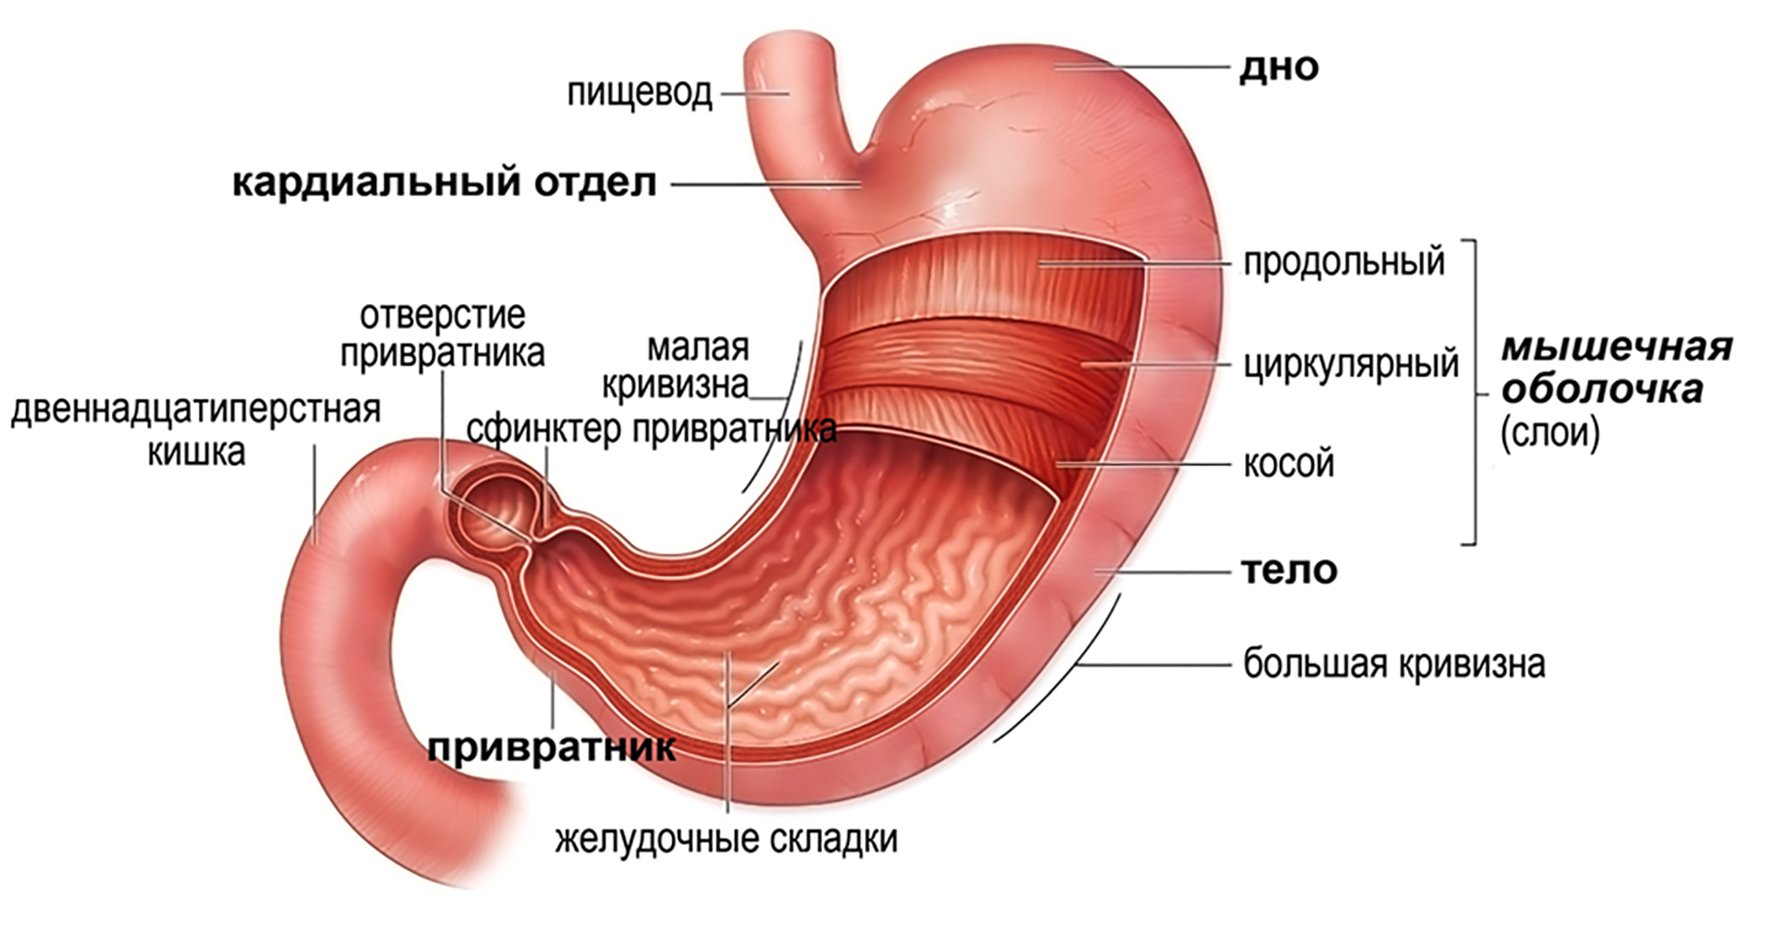 Внешнее строение желудка анатомия. Желудок строение анатомия атлас. Строение желудка человека привратник. Привратник желудка анатомия. Строение желудка биология